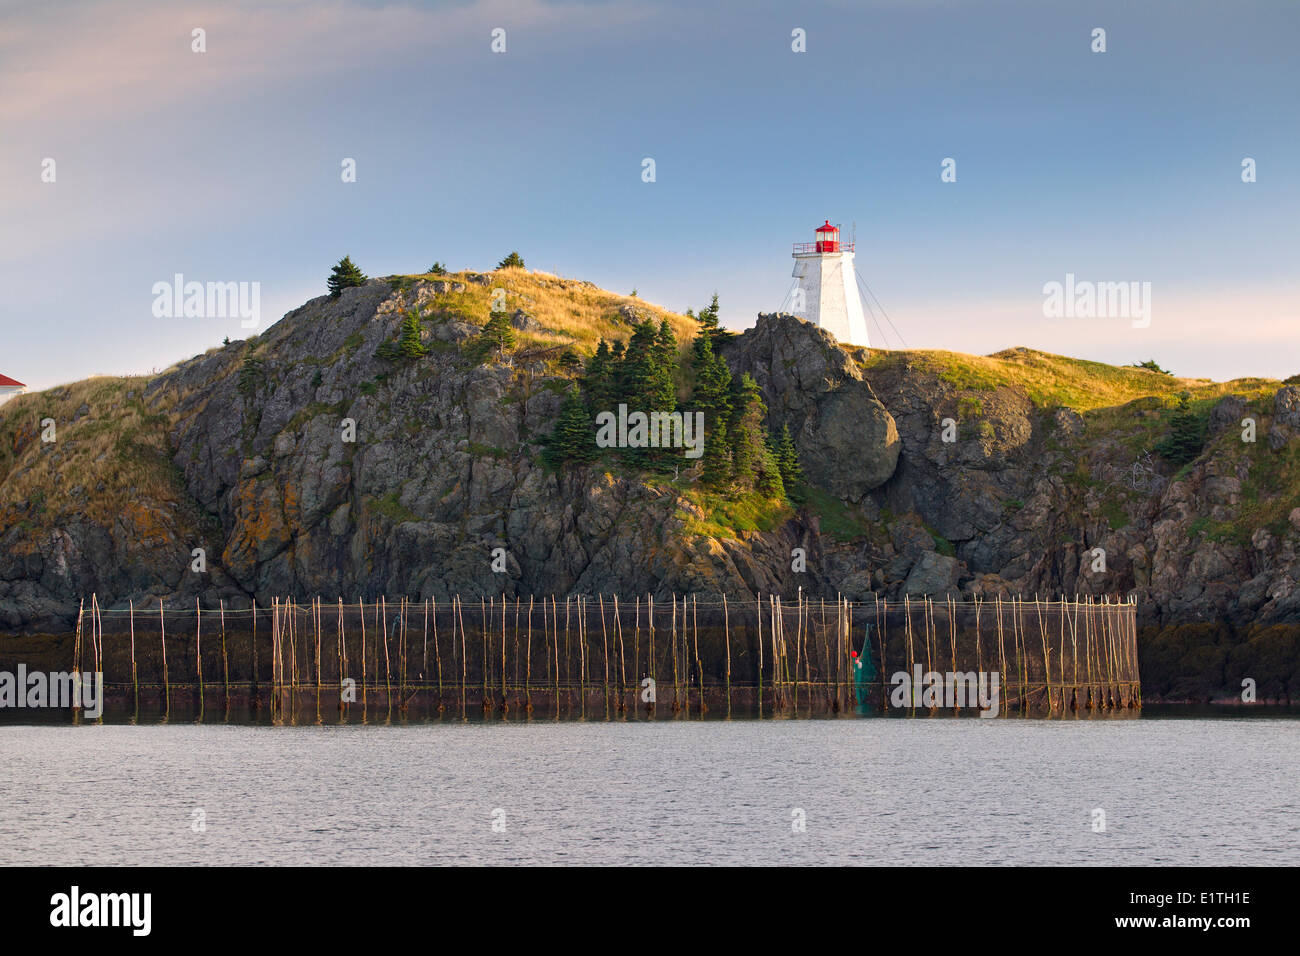 Weir off net Phare Swallowtail, Grand Manan Island, dans la baie de Fundy, Nouveau-Brunswick, Canada Banque D'Images